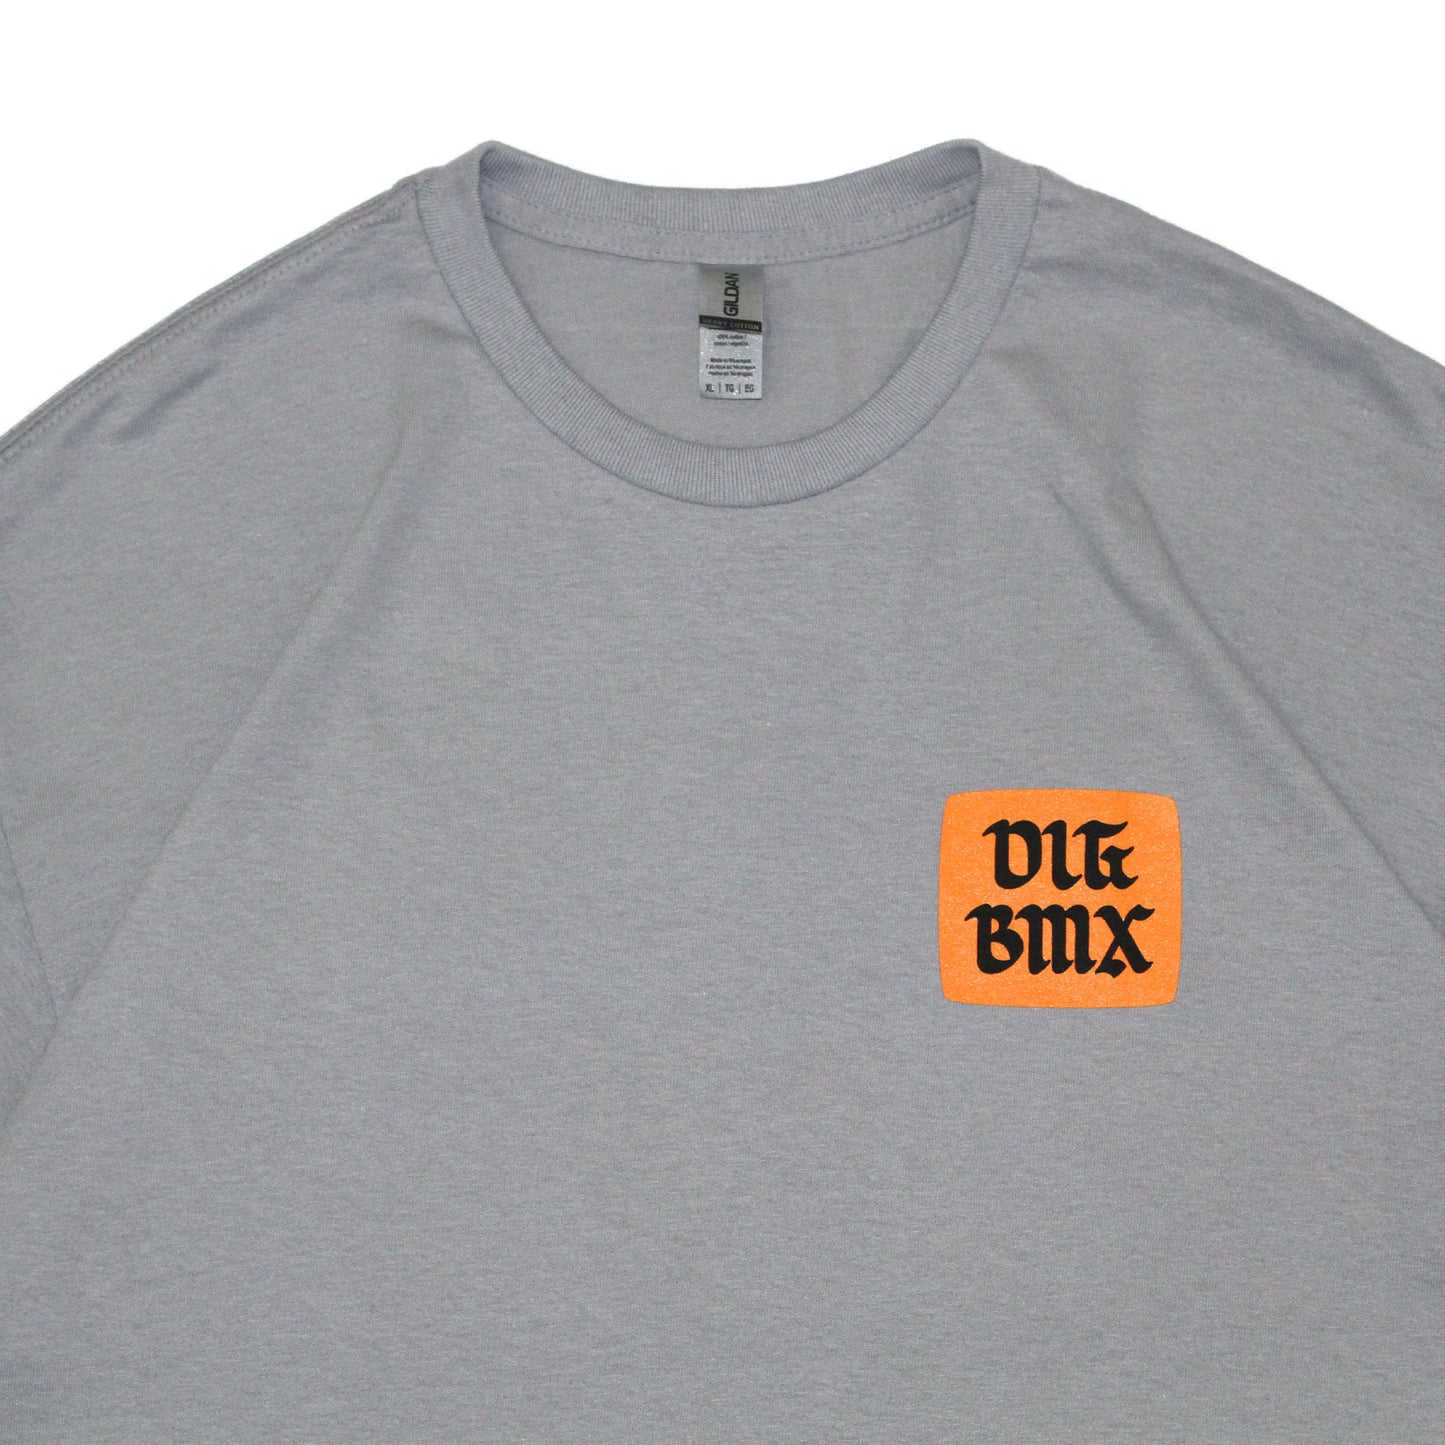 BURN SLOW - Burn BMX T-Shirt/Gravel